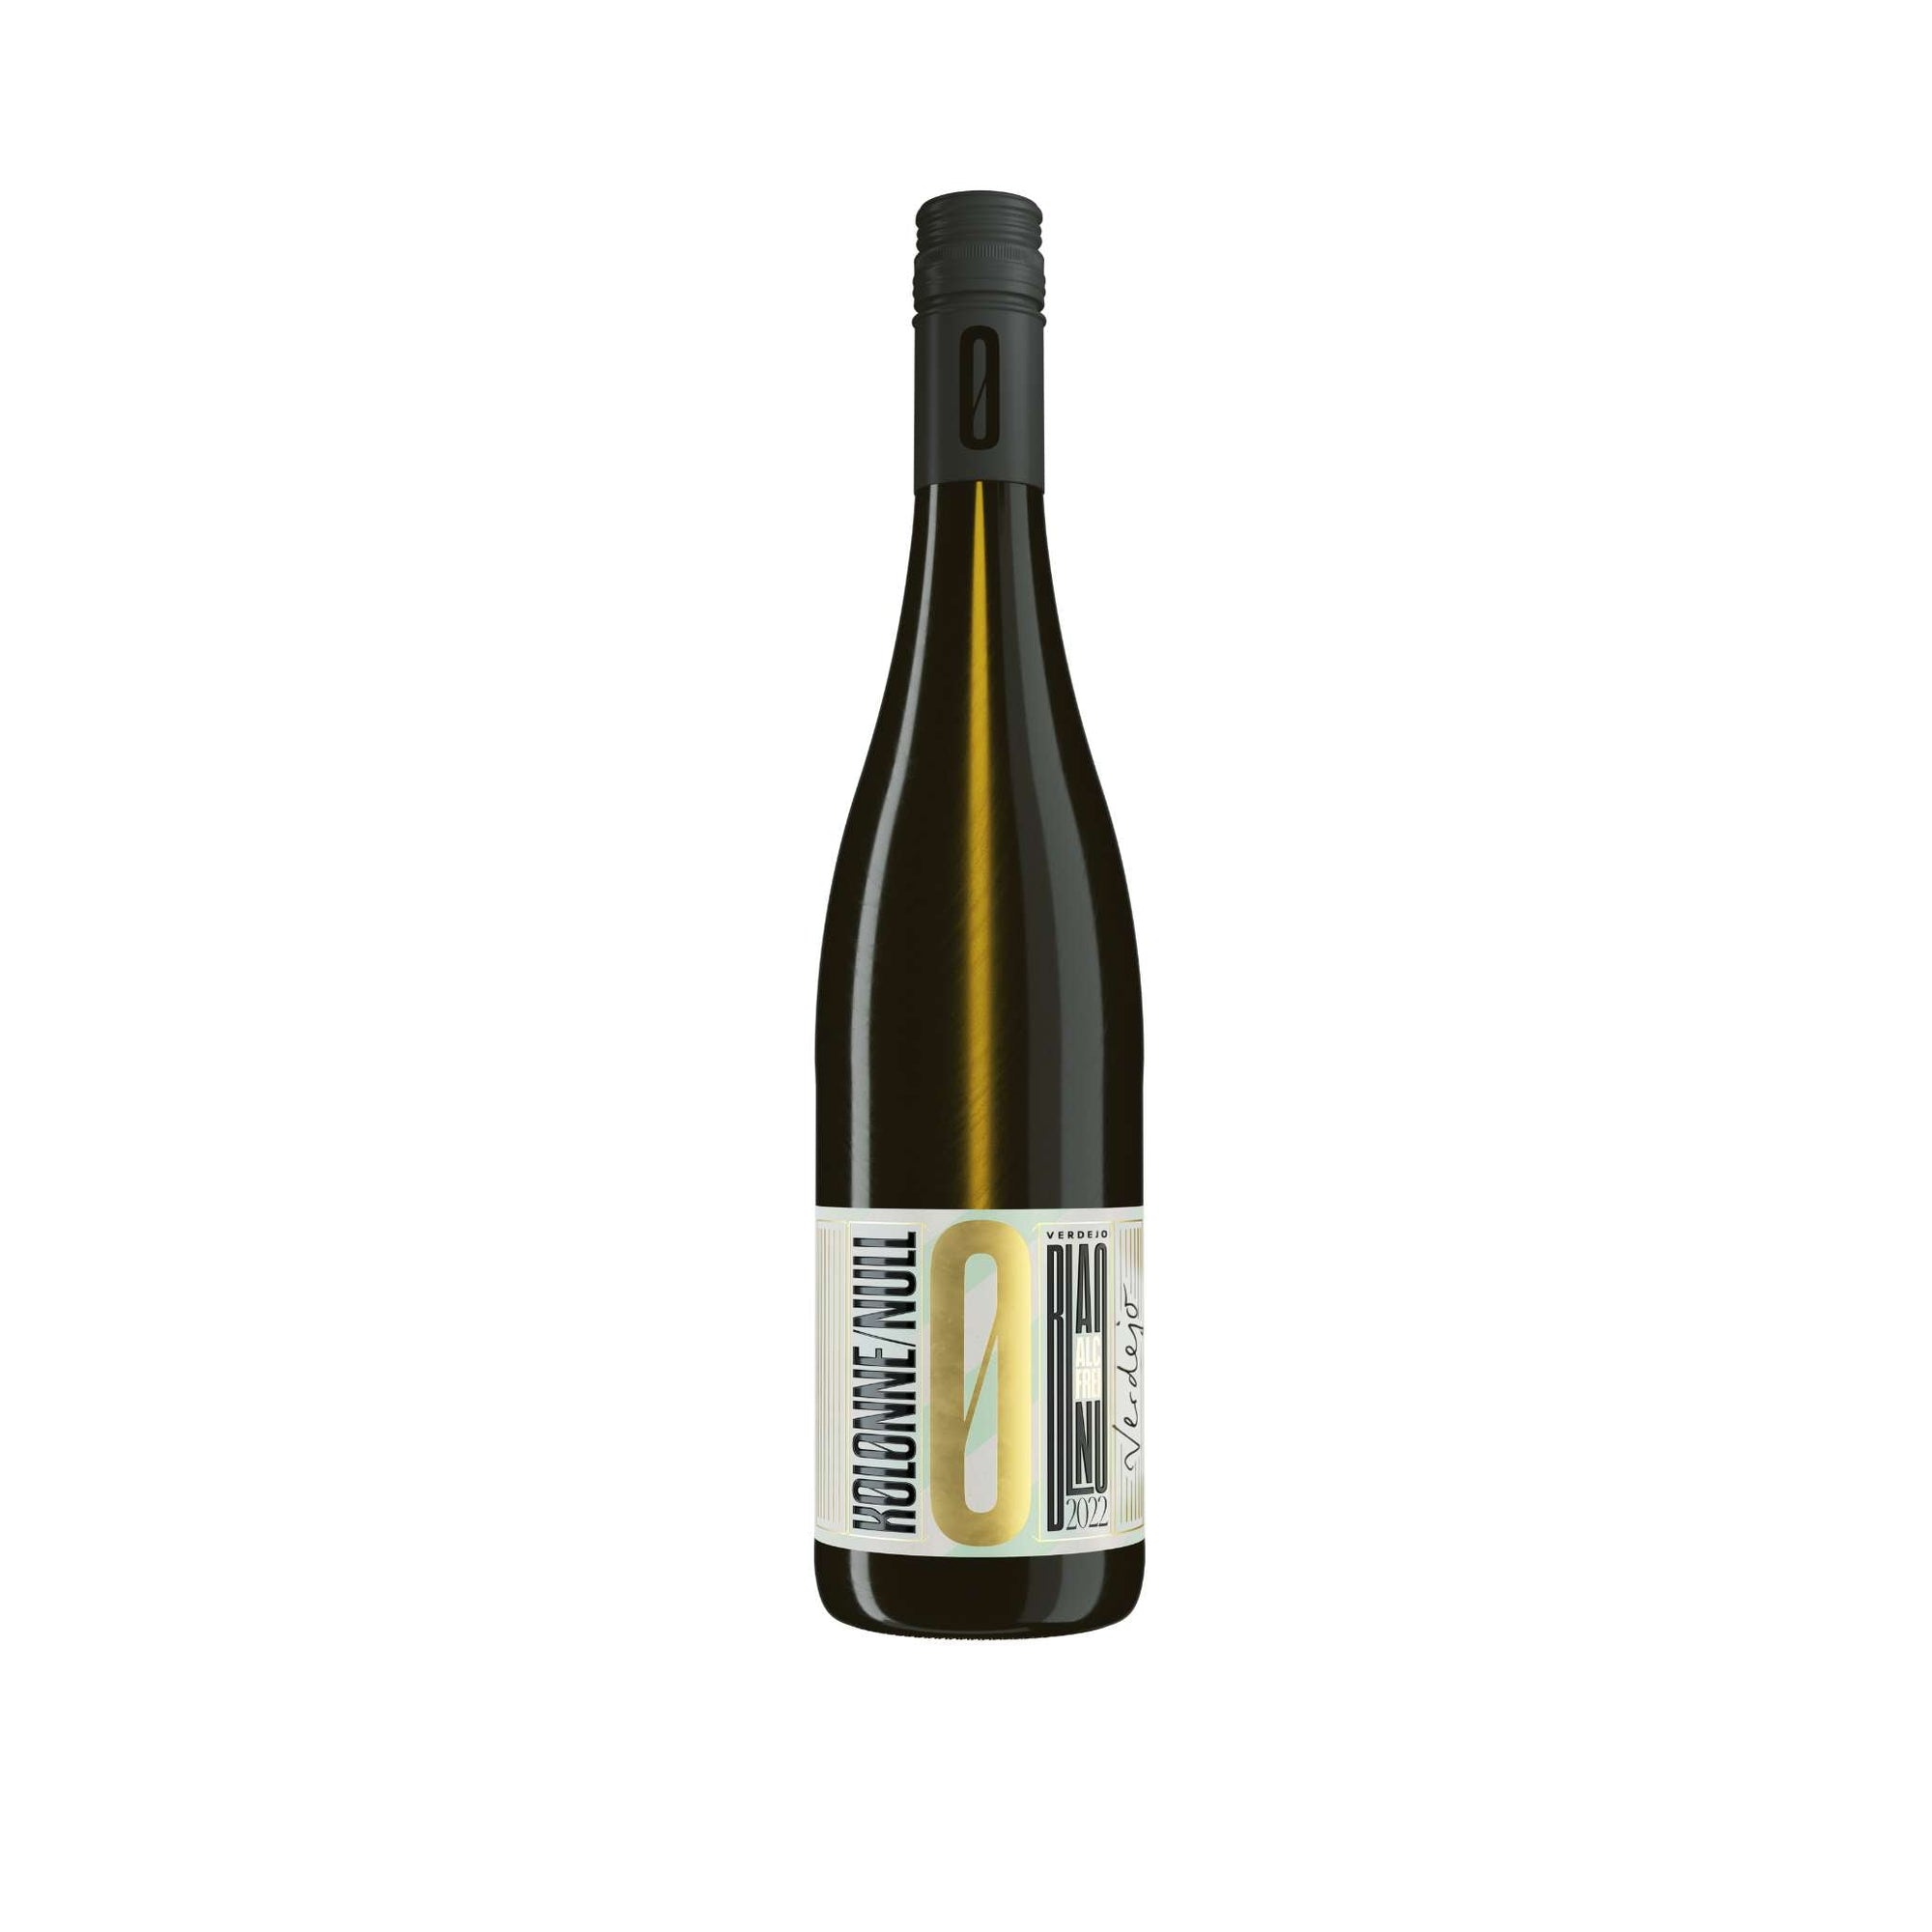 Kolonne Null Verdejo White Wine 2022 Non-Alcoholic Wine - Boisson